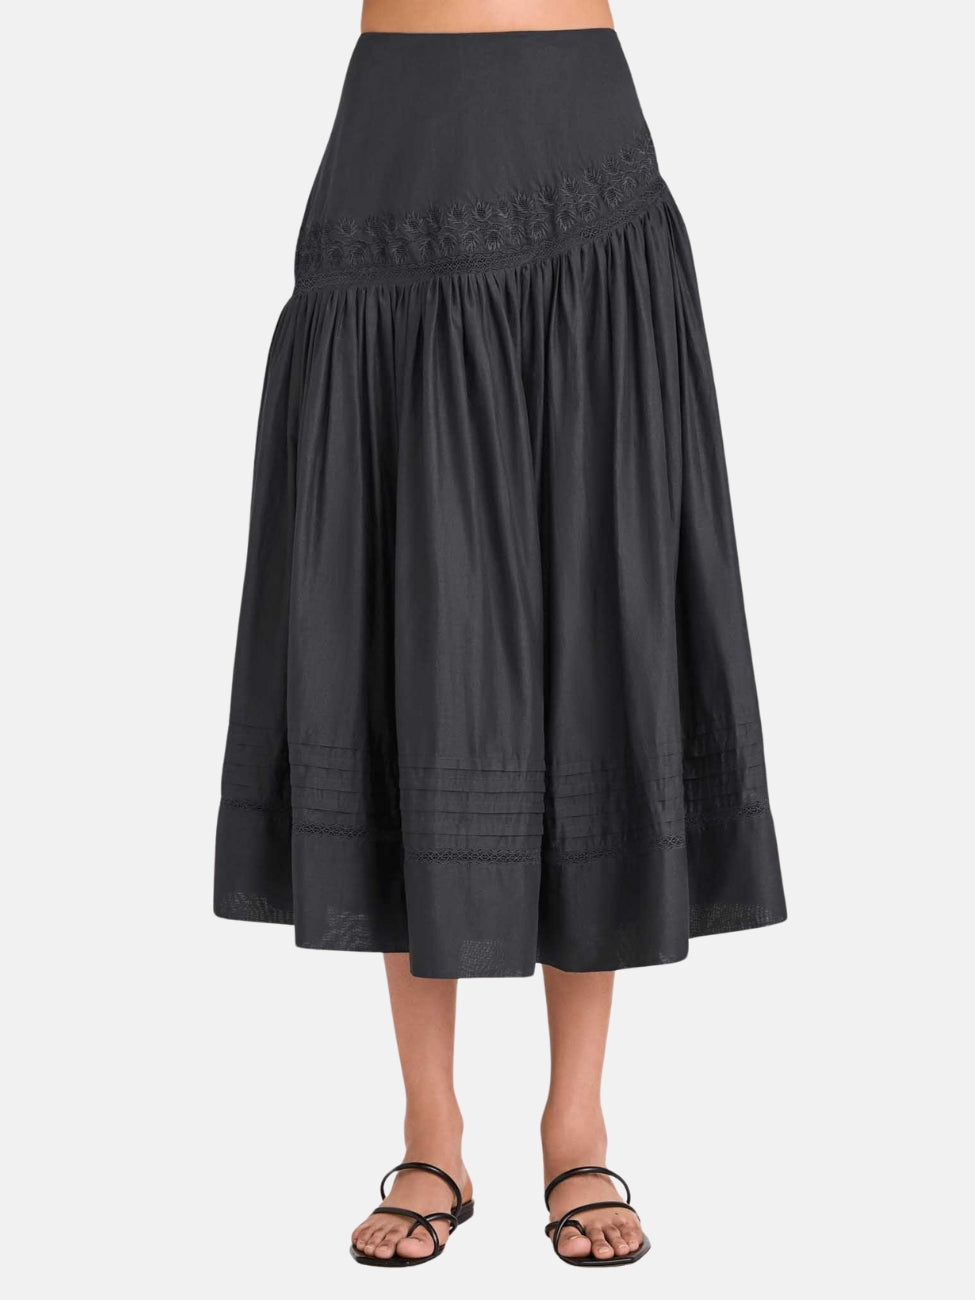 Aubrac Skirt in Graphite